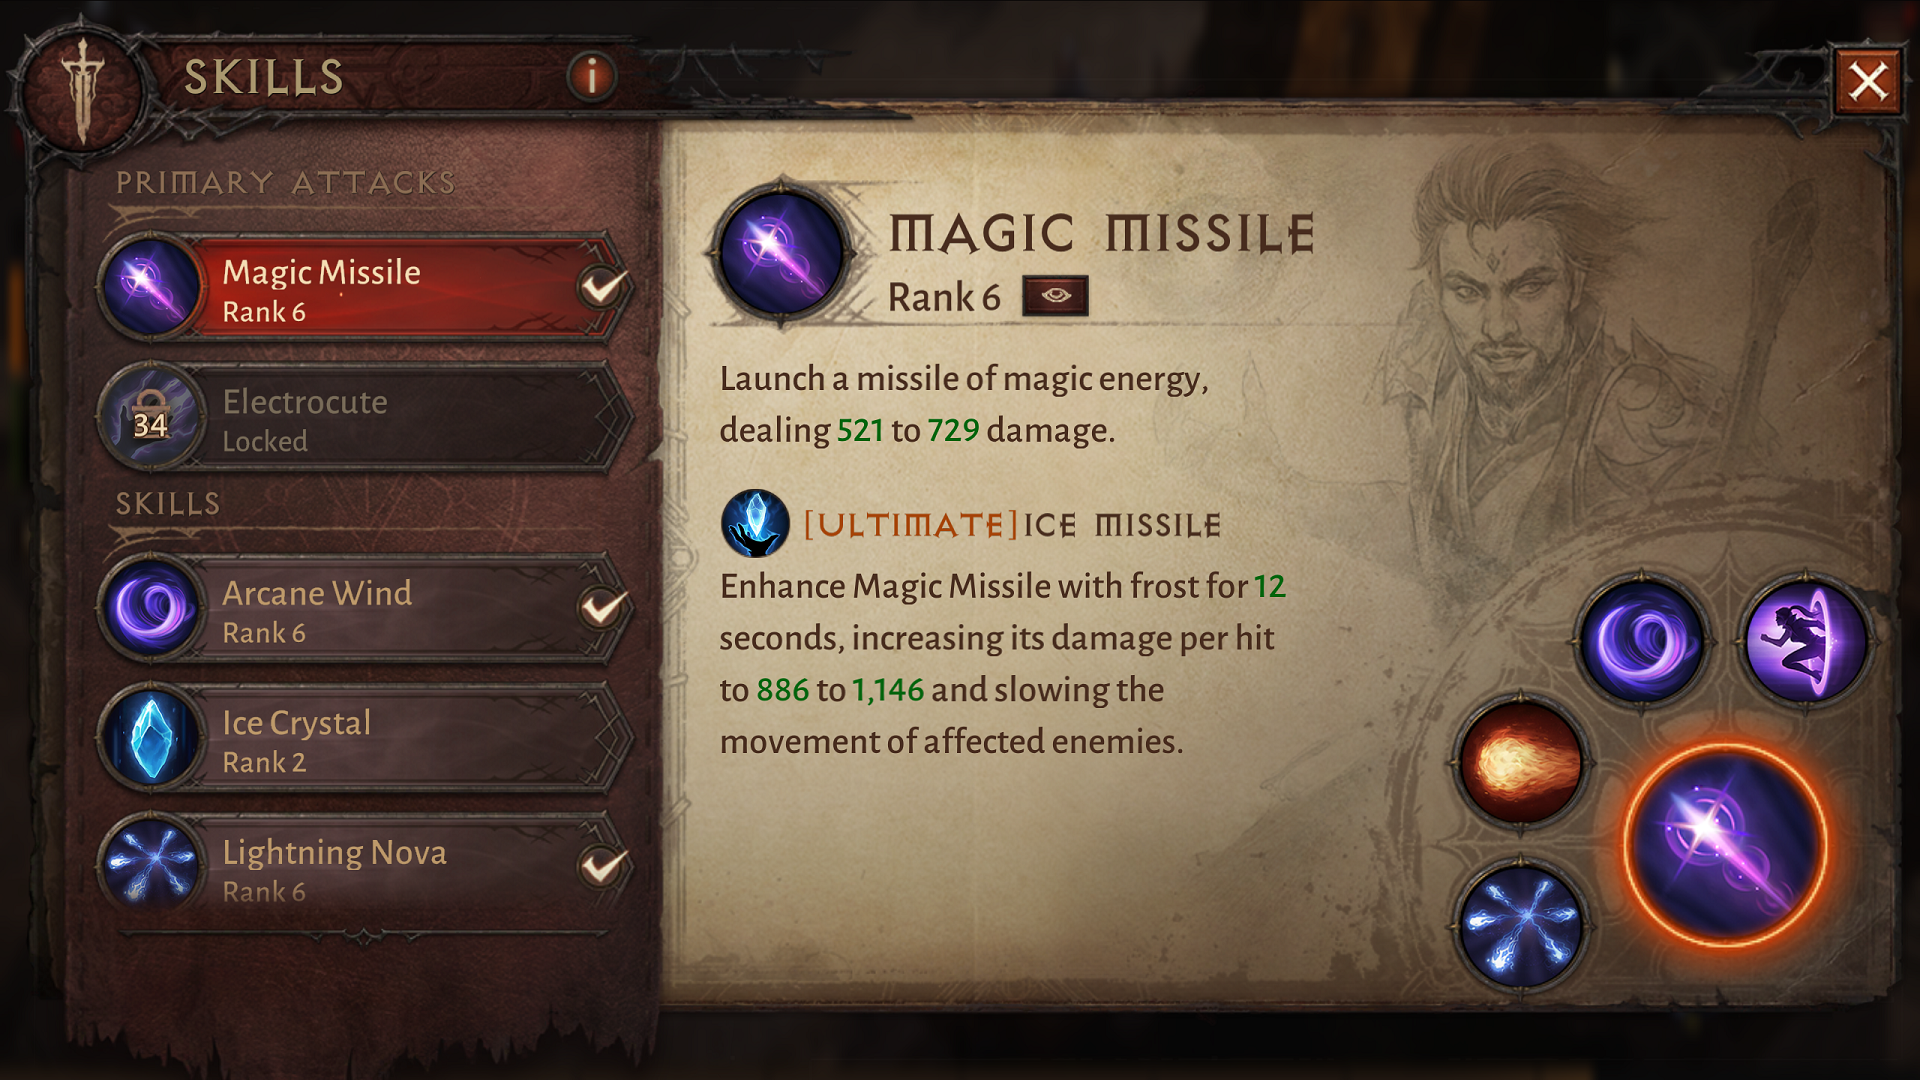 The description of the Magic Missile main ability for the Wizard in Diablo Immortal